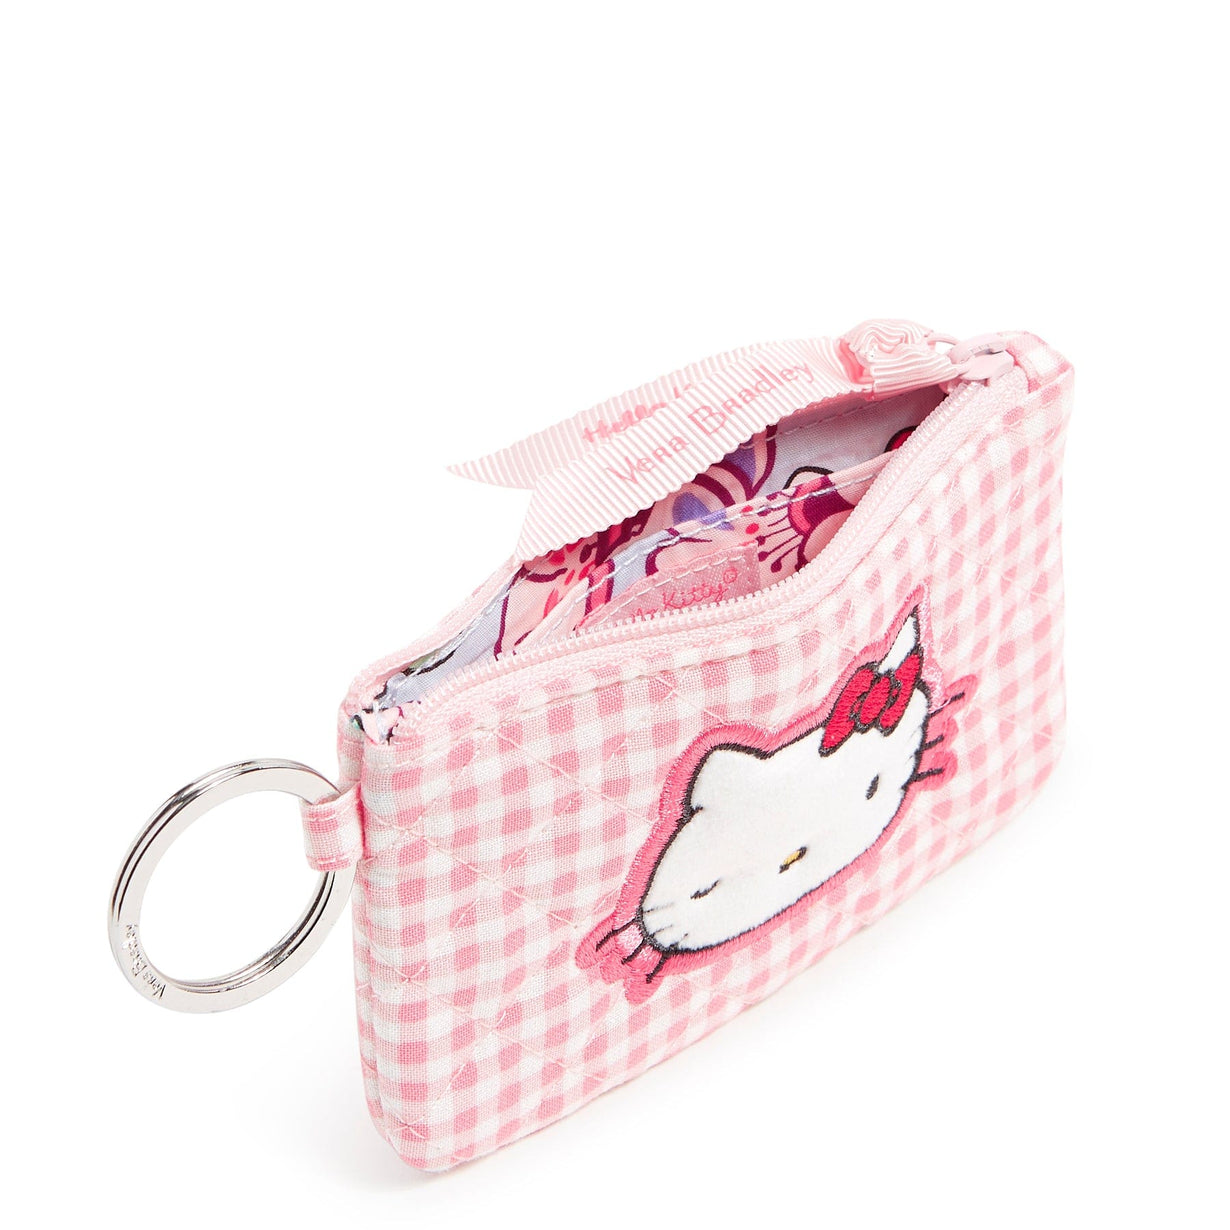 Hello Kitty Ribbon Die-cut Coin Purse Bag Green Sanrio Inspired by You.